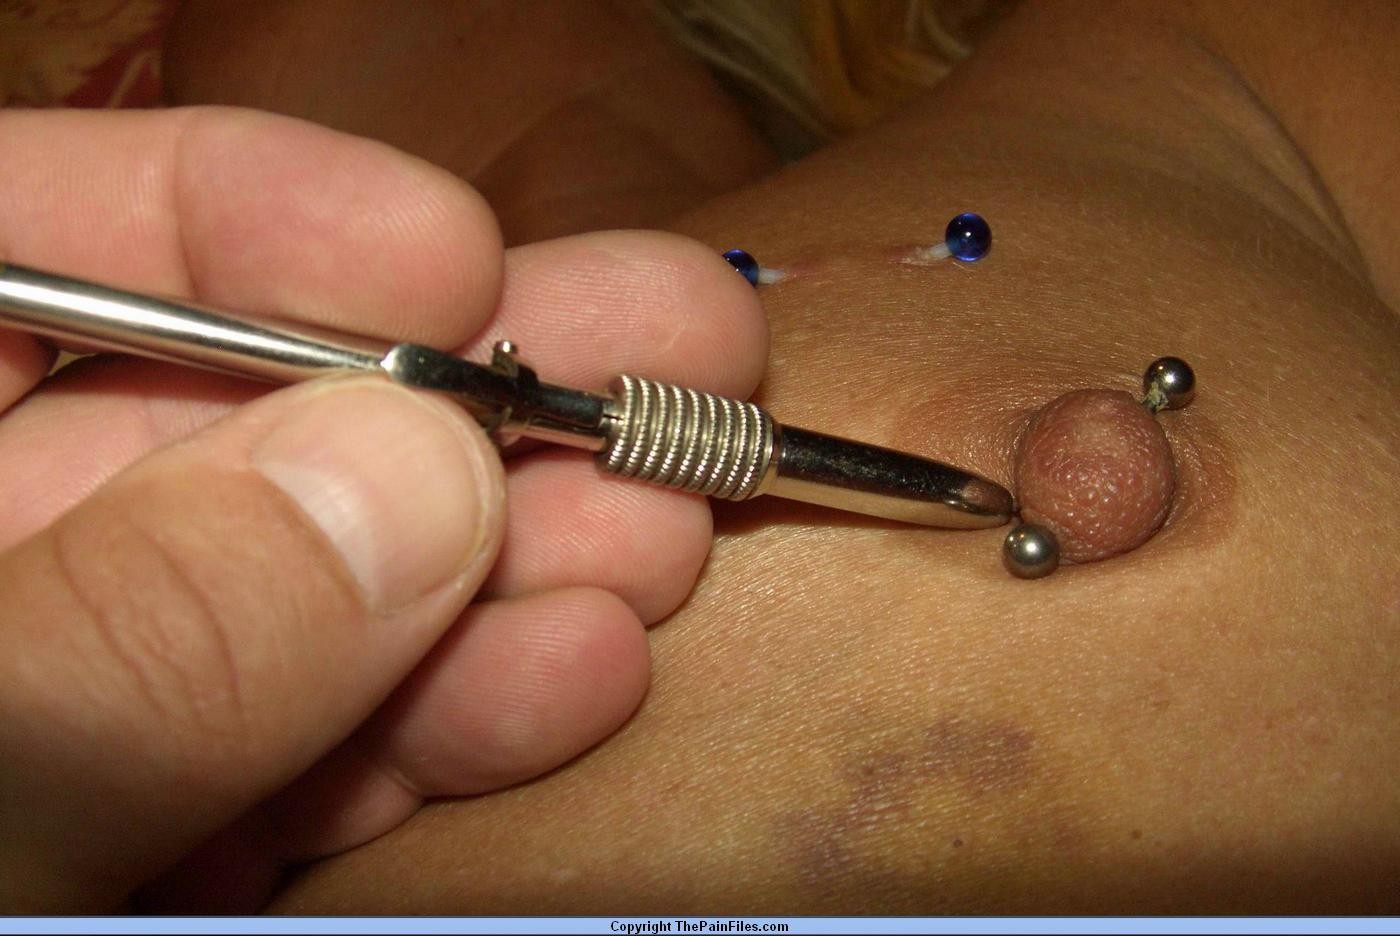 Mature german bdsm lifestyle slavegirl in bizarre needle pain torments #72183634